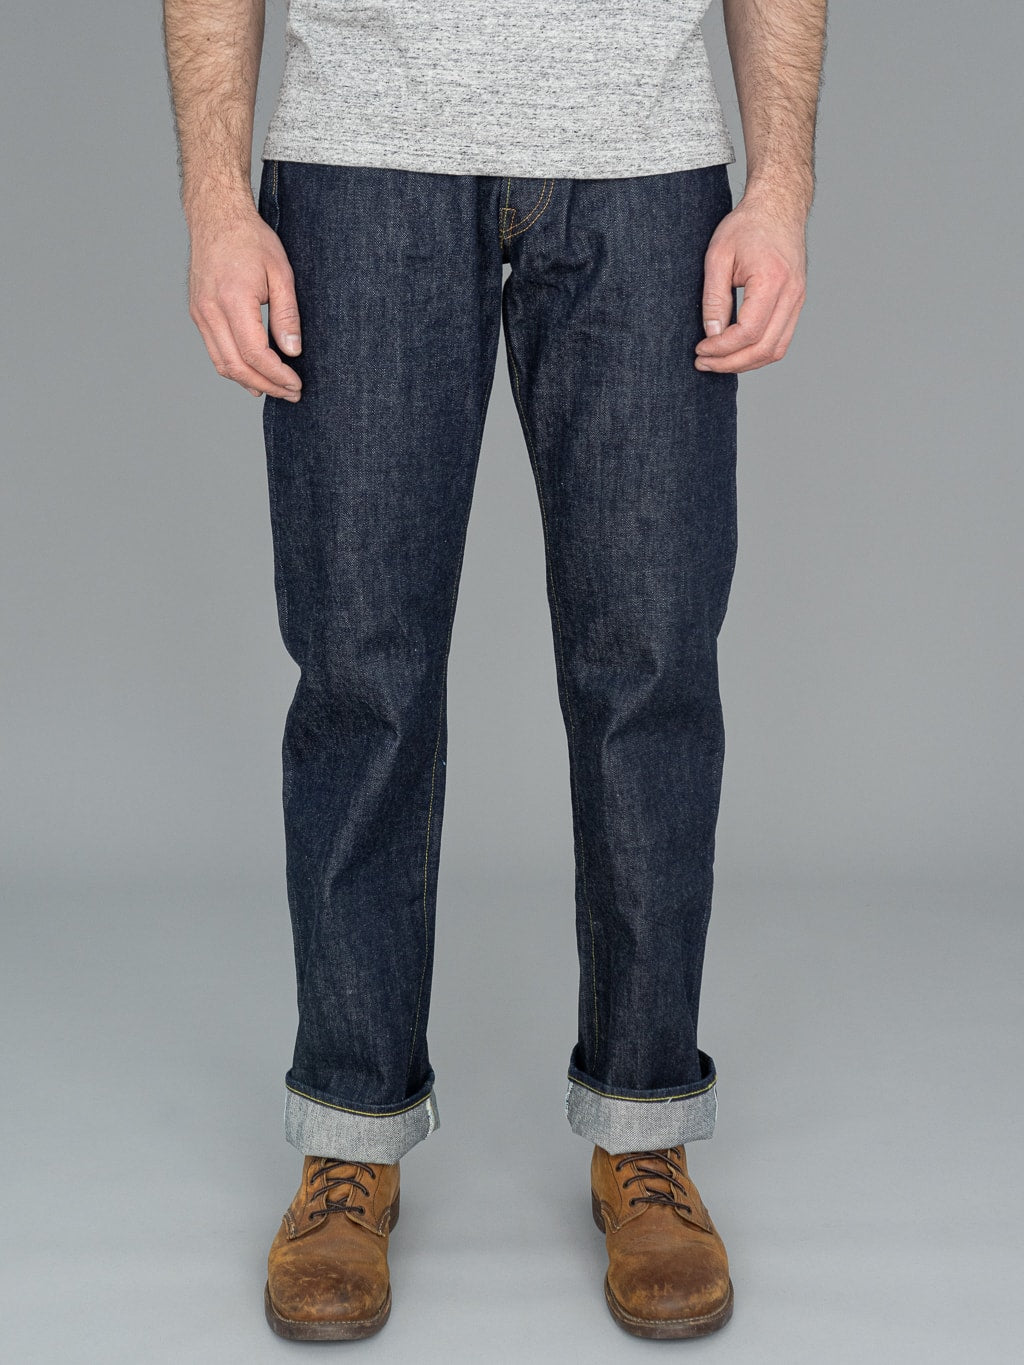 sugar cane SC41947 14.25oz denim 1947 model regular straight jeans fit